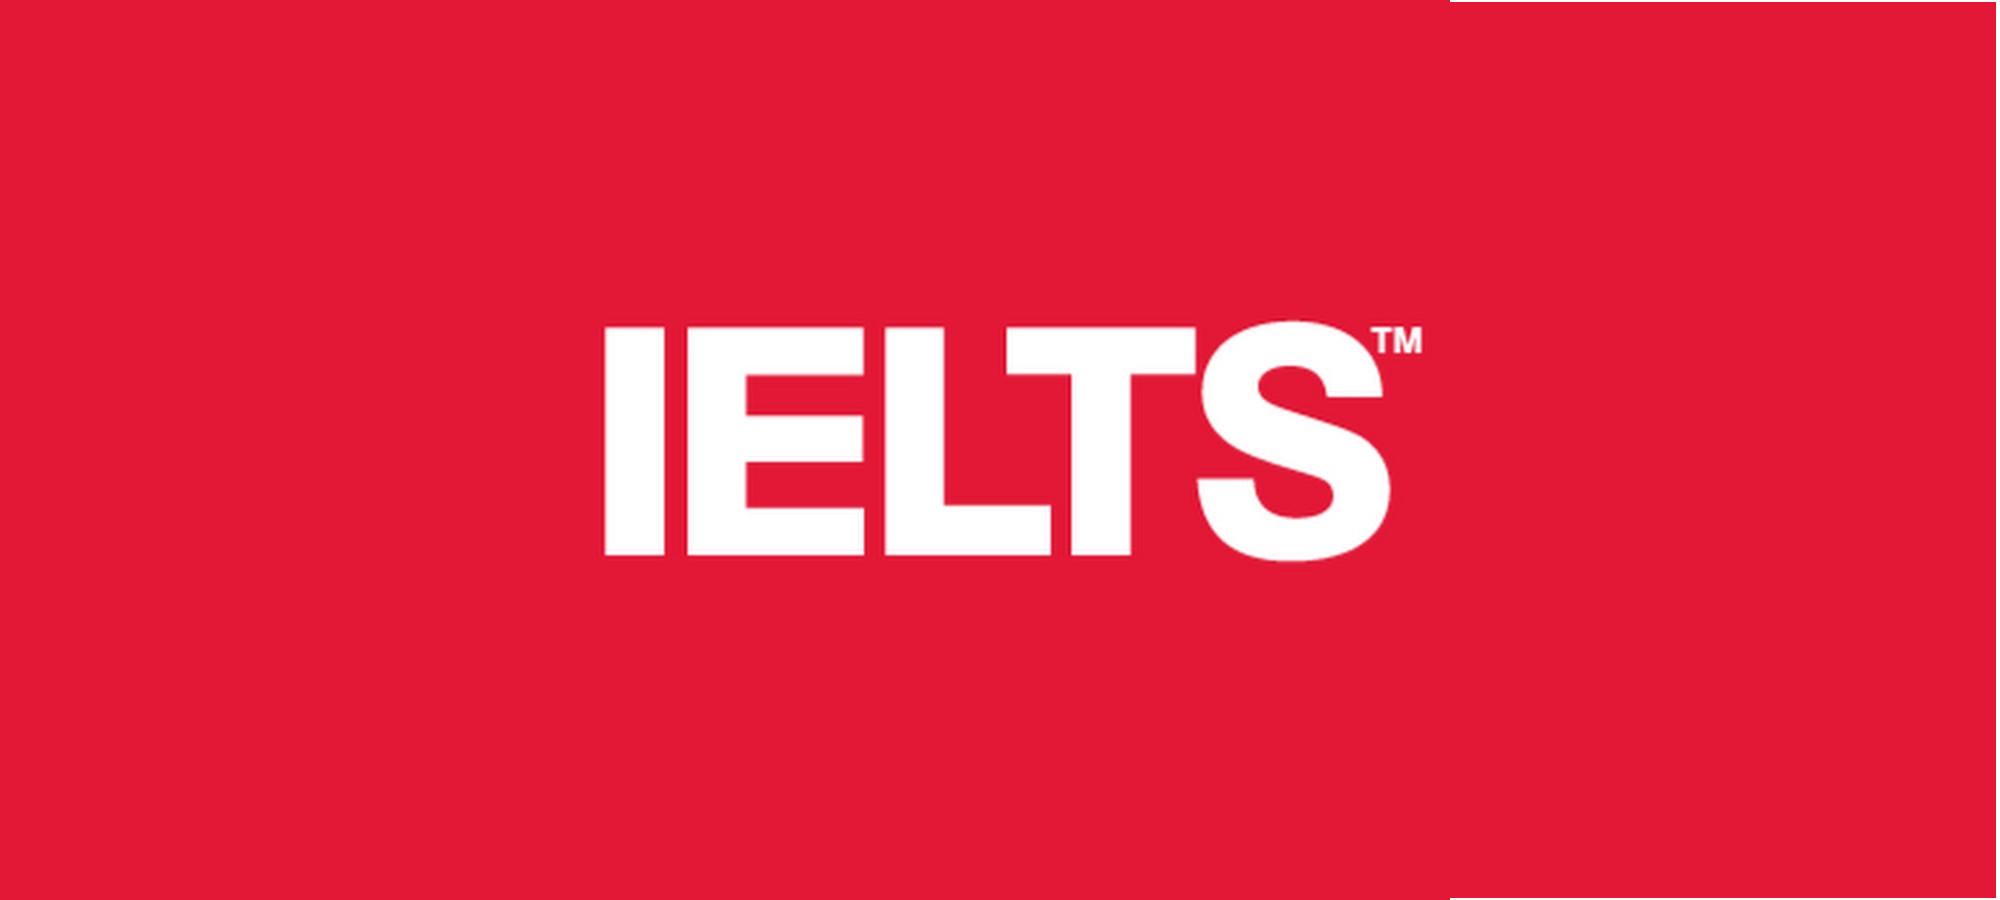 Giải đáp câu hỏi IELTS 4.0 cần bao nhiêu từ vựng?